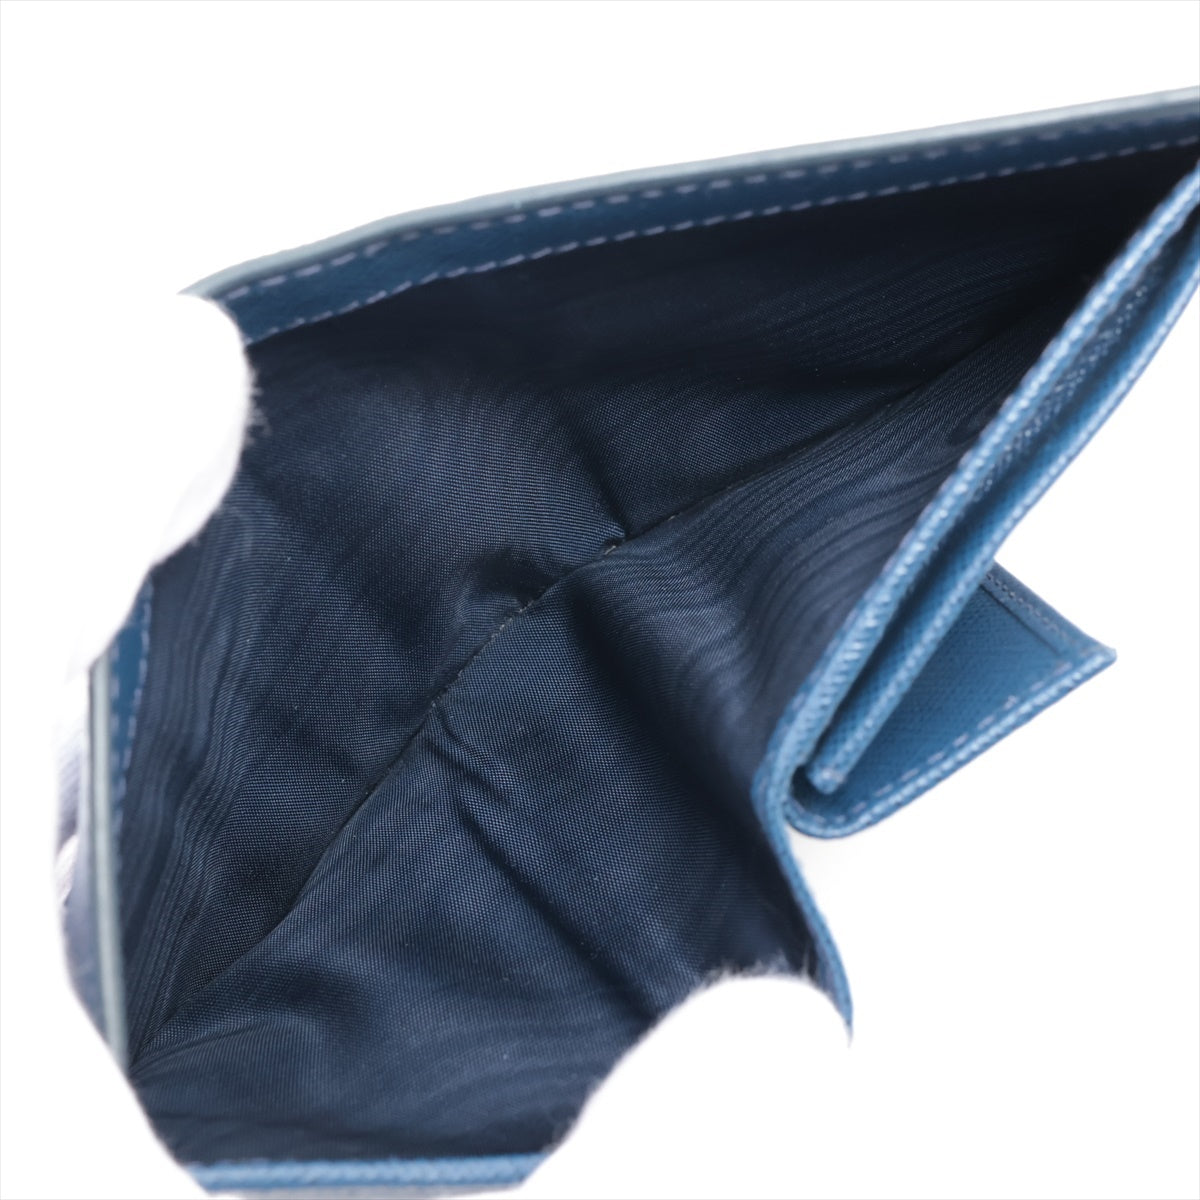 Prada Saffiano 1MV204 Leather Wallet Blue